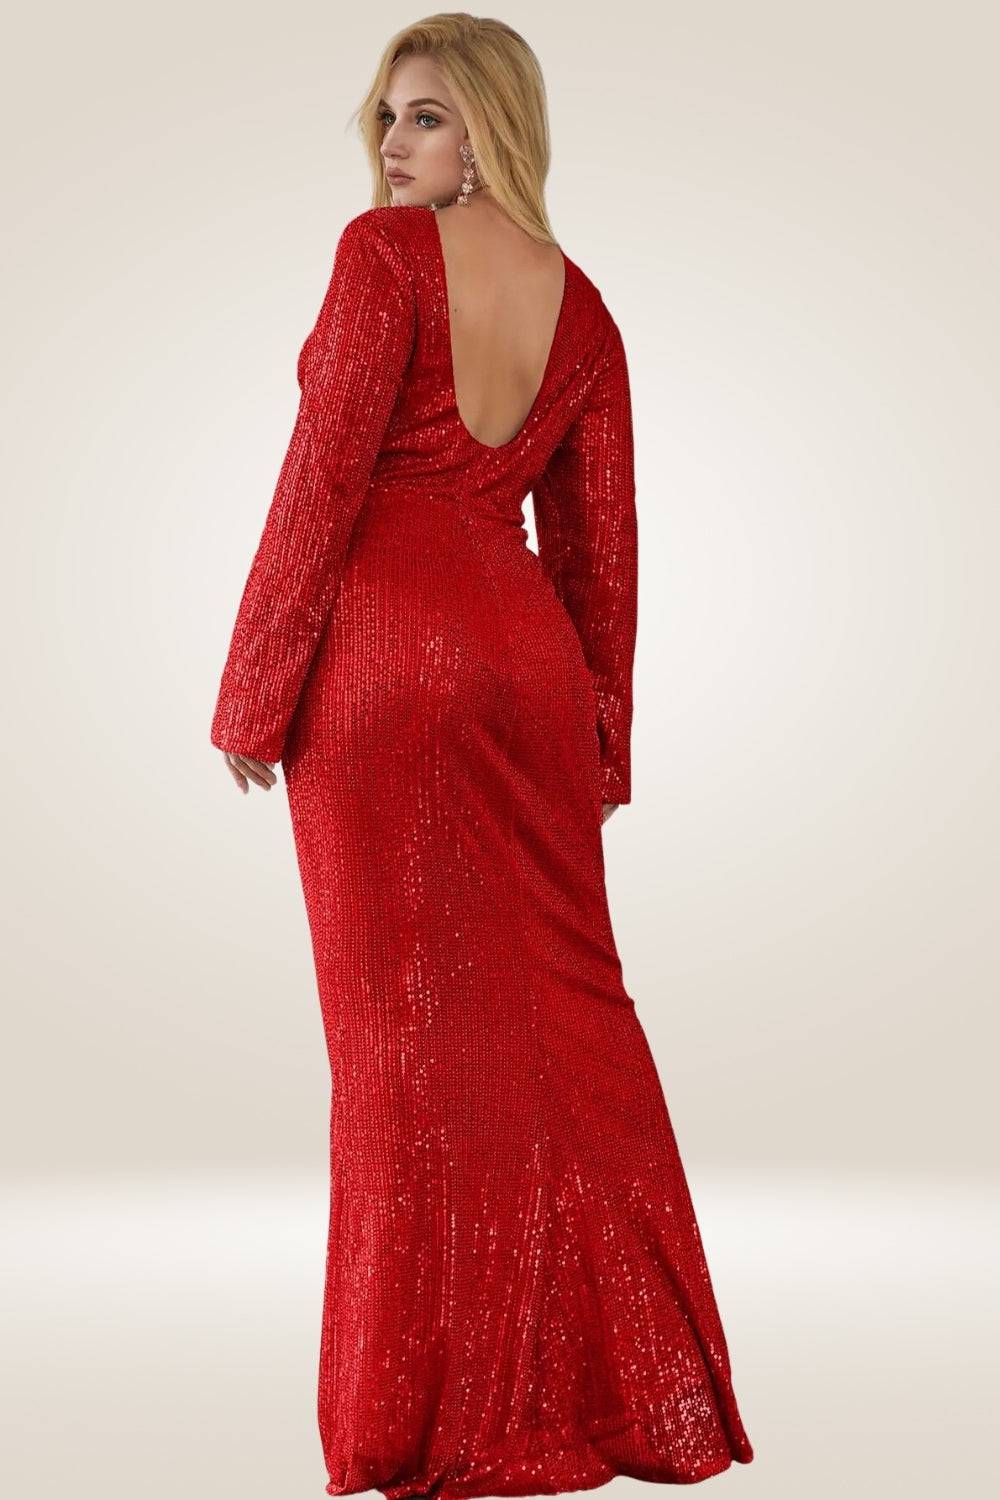 All Over Sequin Plus Size Red Maxi Dress - TGC Boutique - Plus Size Dress